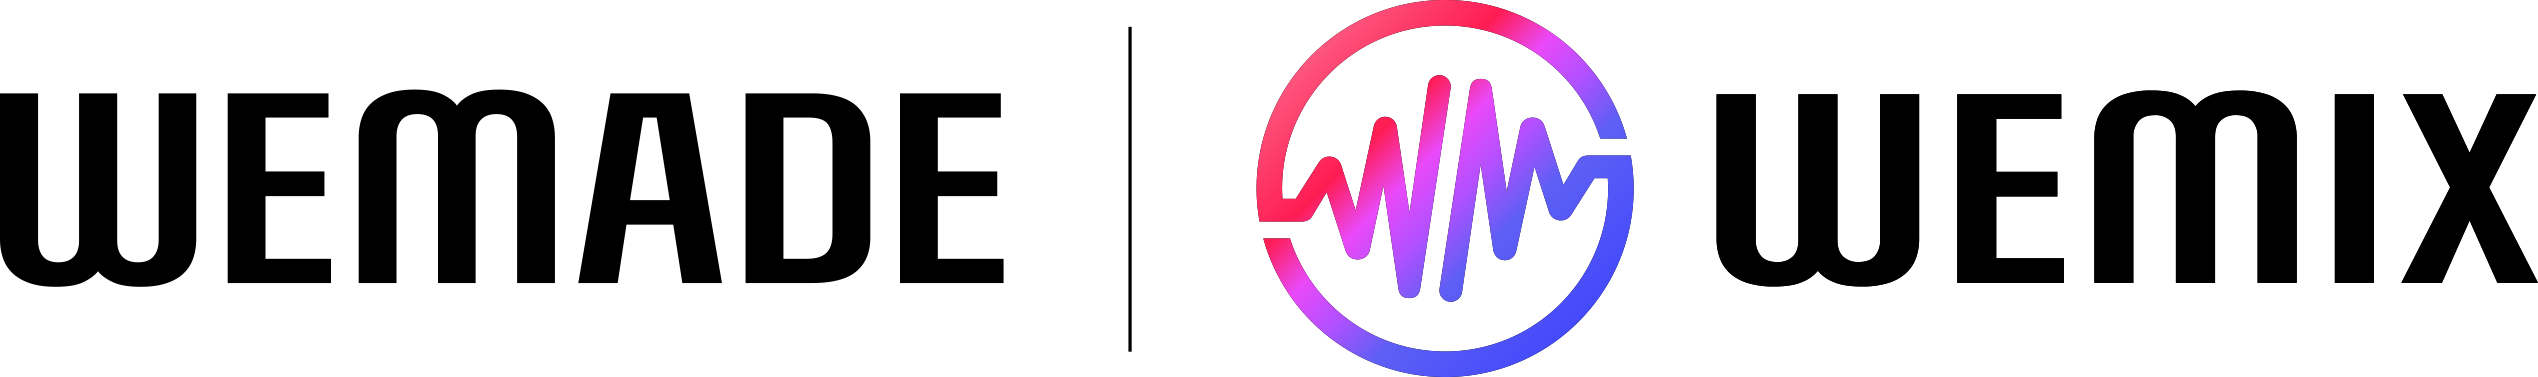 WEMIX3.0 Welcomes Ubisoft as Node Council Partner WONDER 26